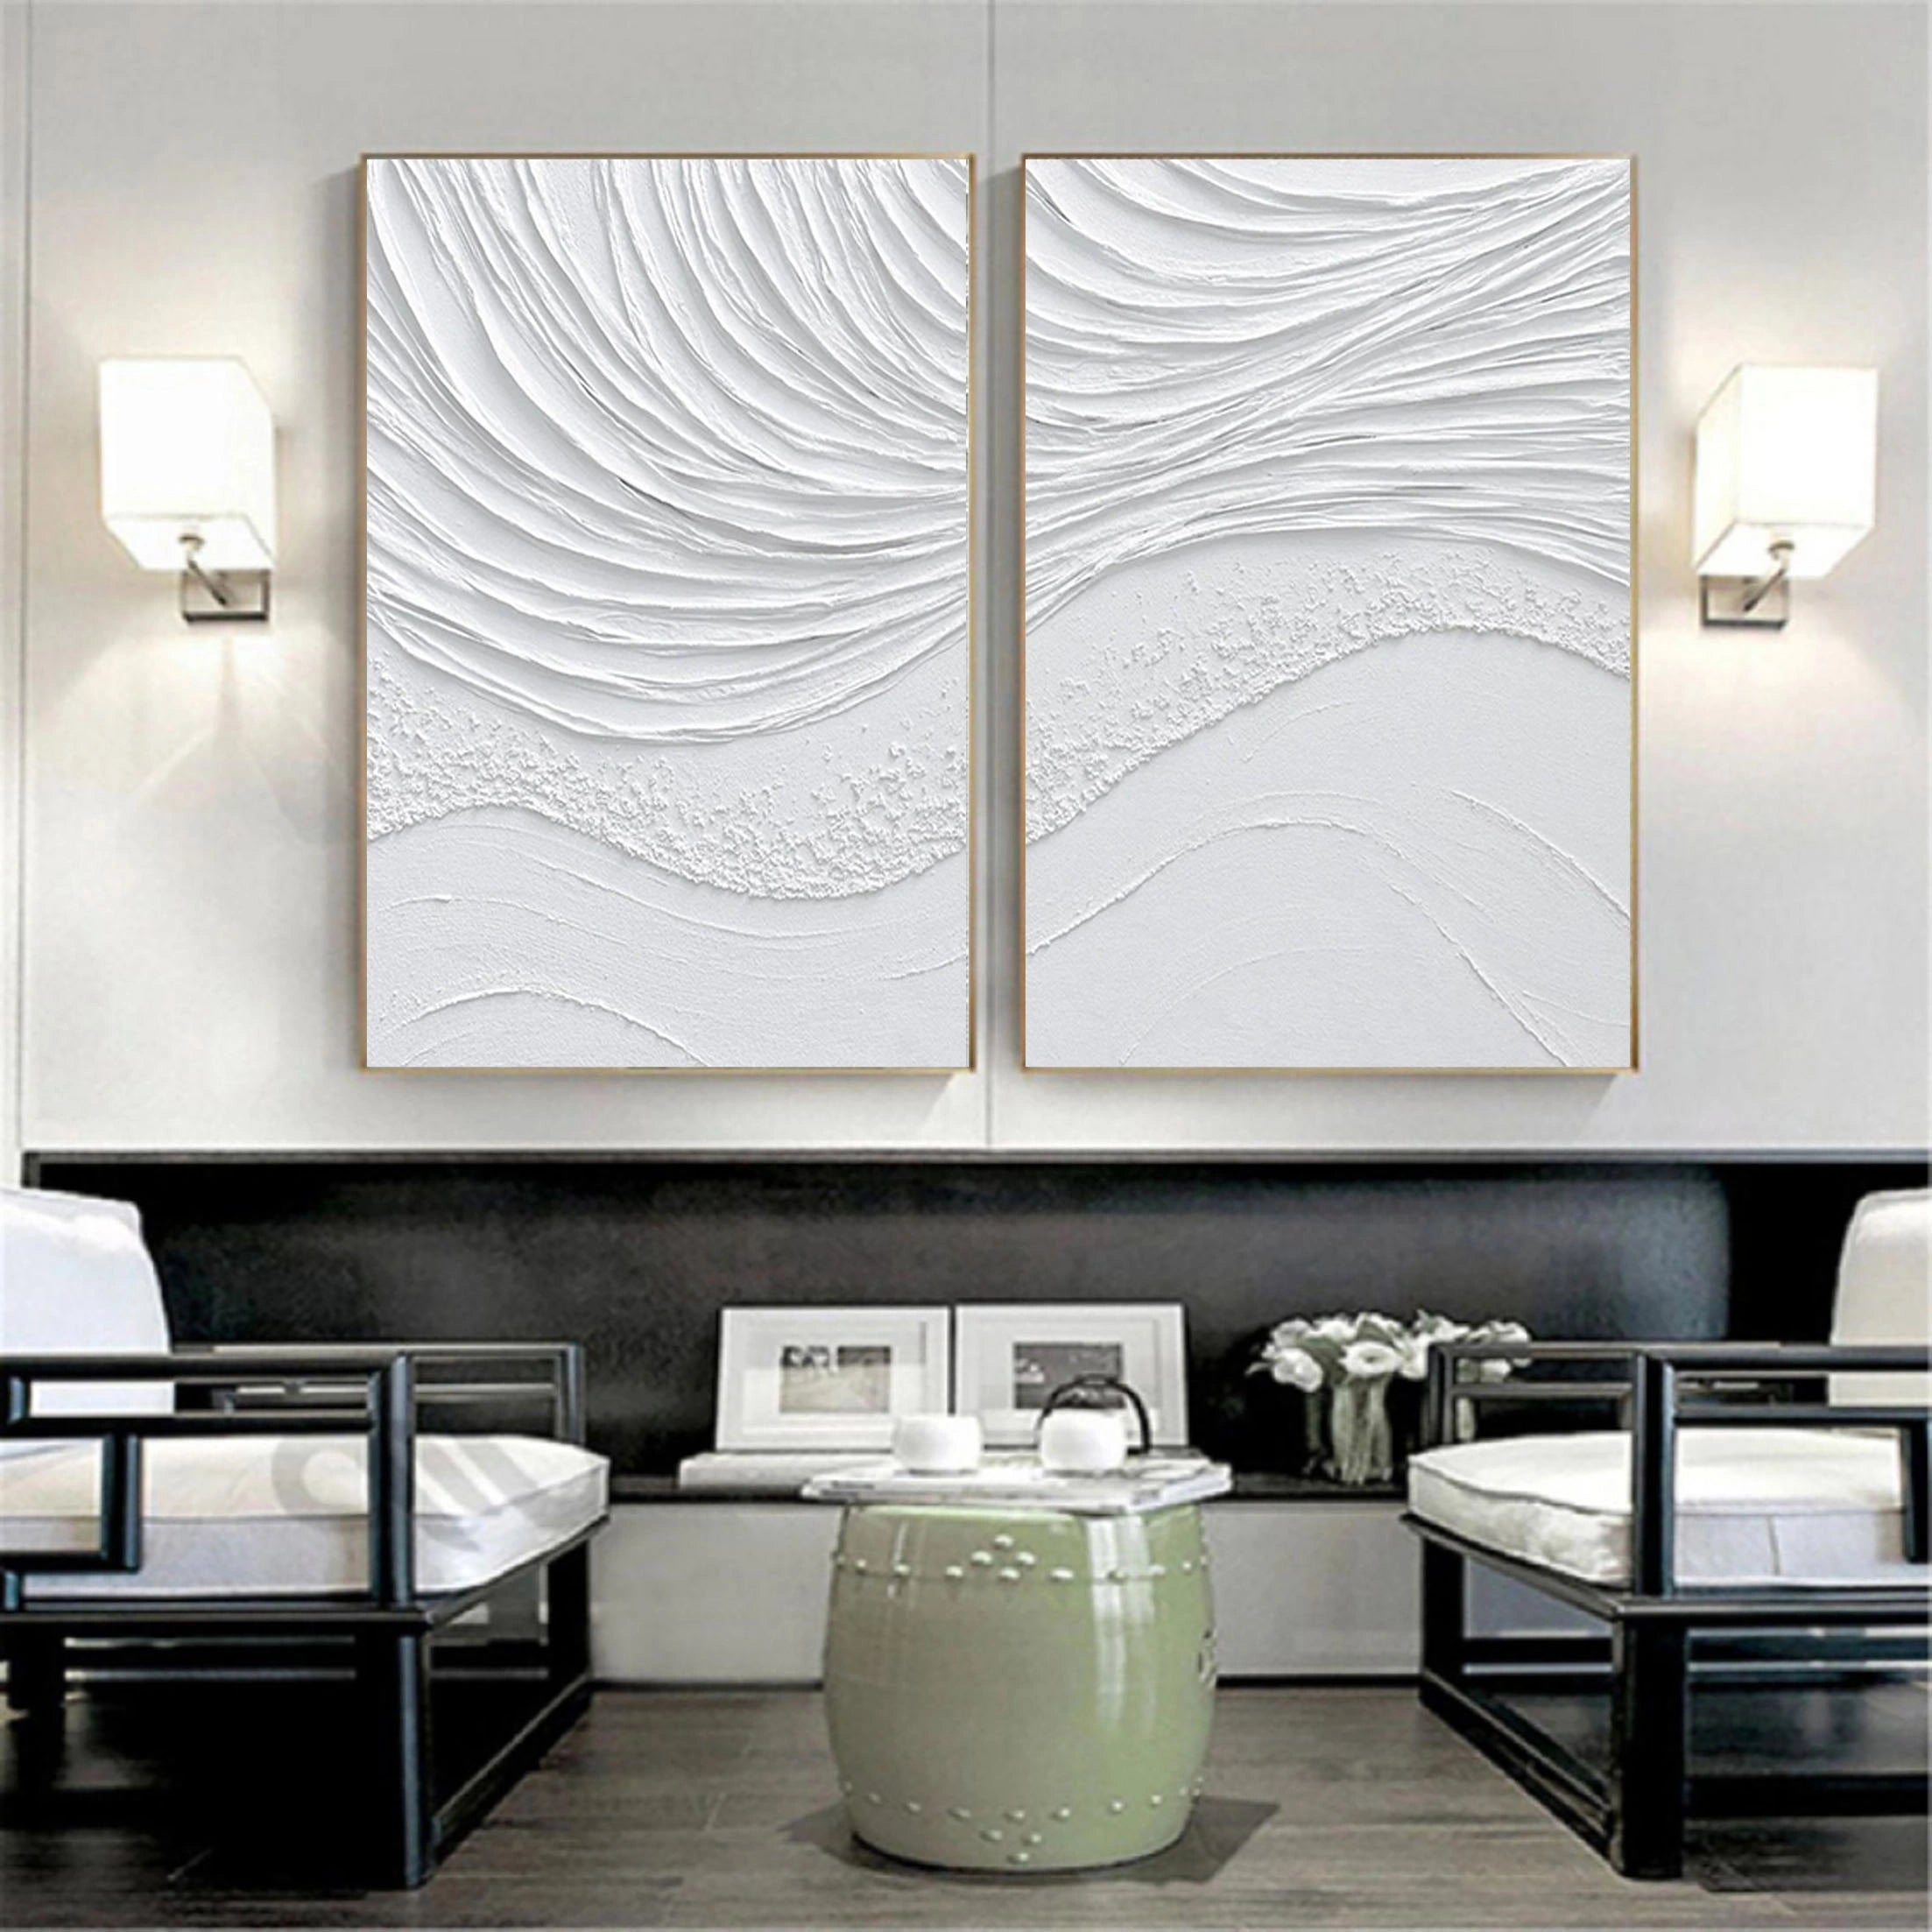 White Sea Waves Textured Plaster Art Painting On Canvas, Modern Minimalist Wall Art